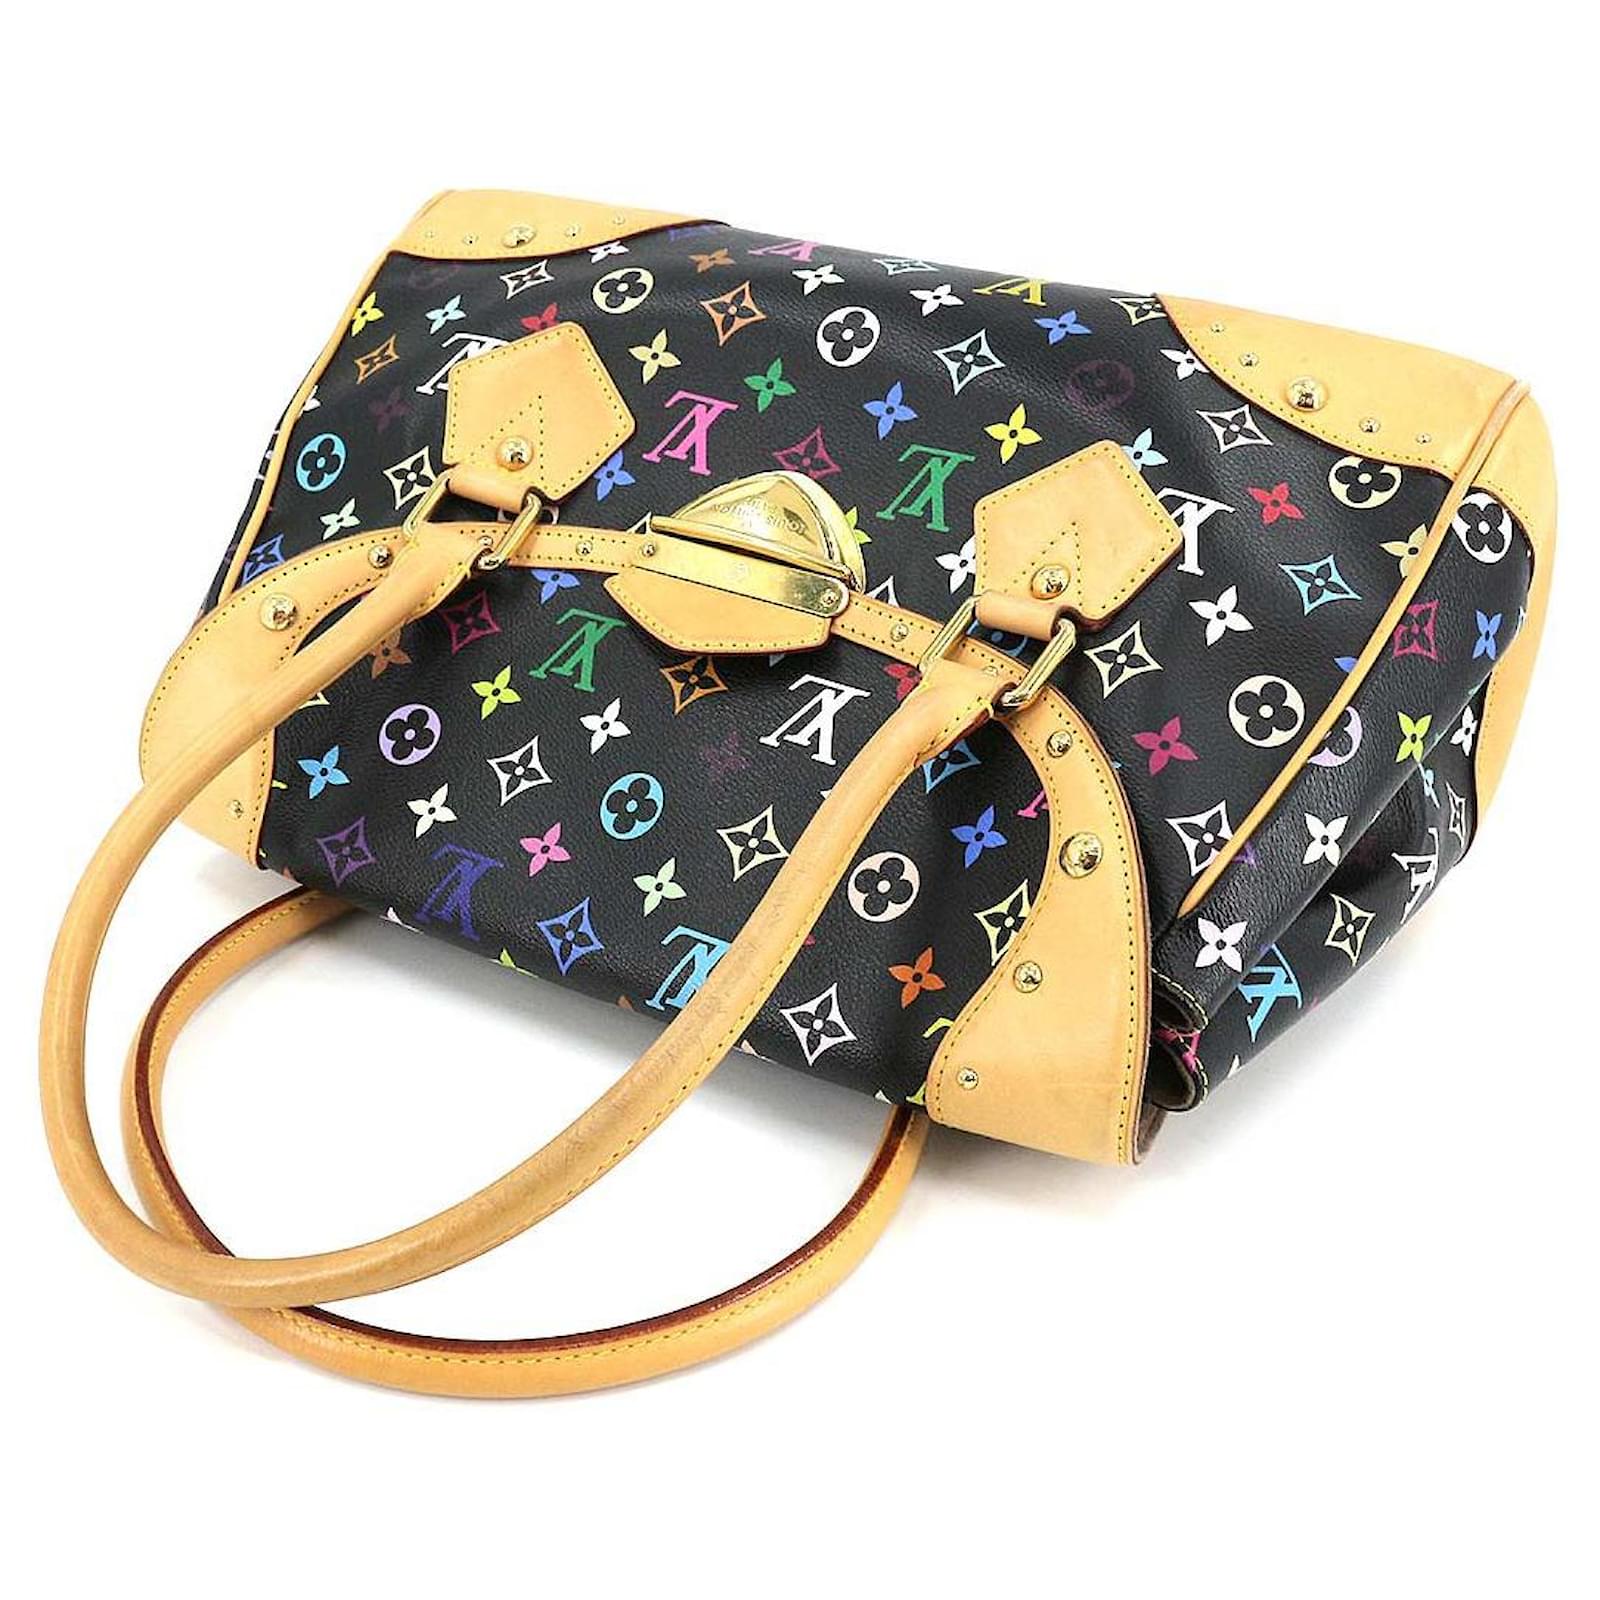 Used] Louis Vuitton Monogram Multicolor Beverly GM Handbag Noir